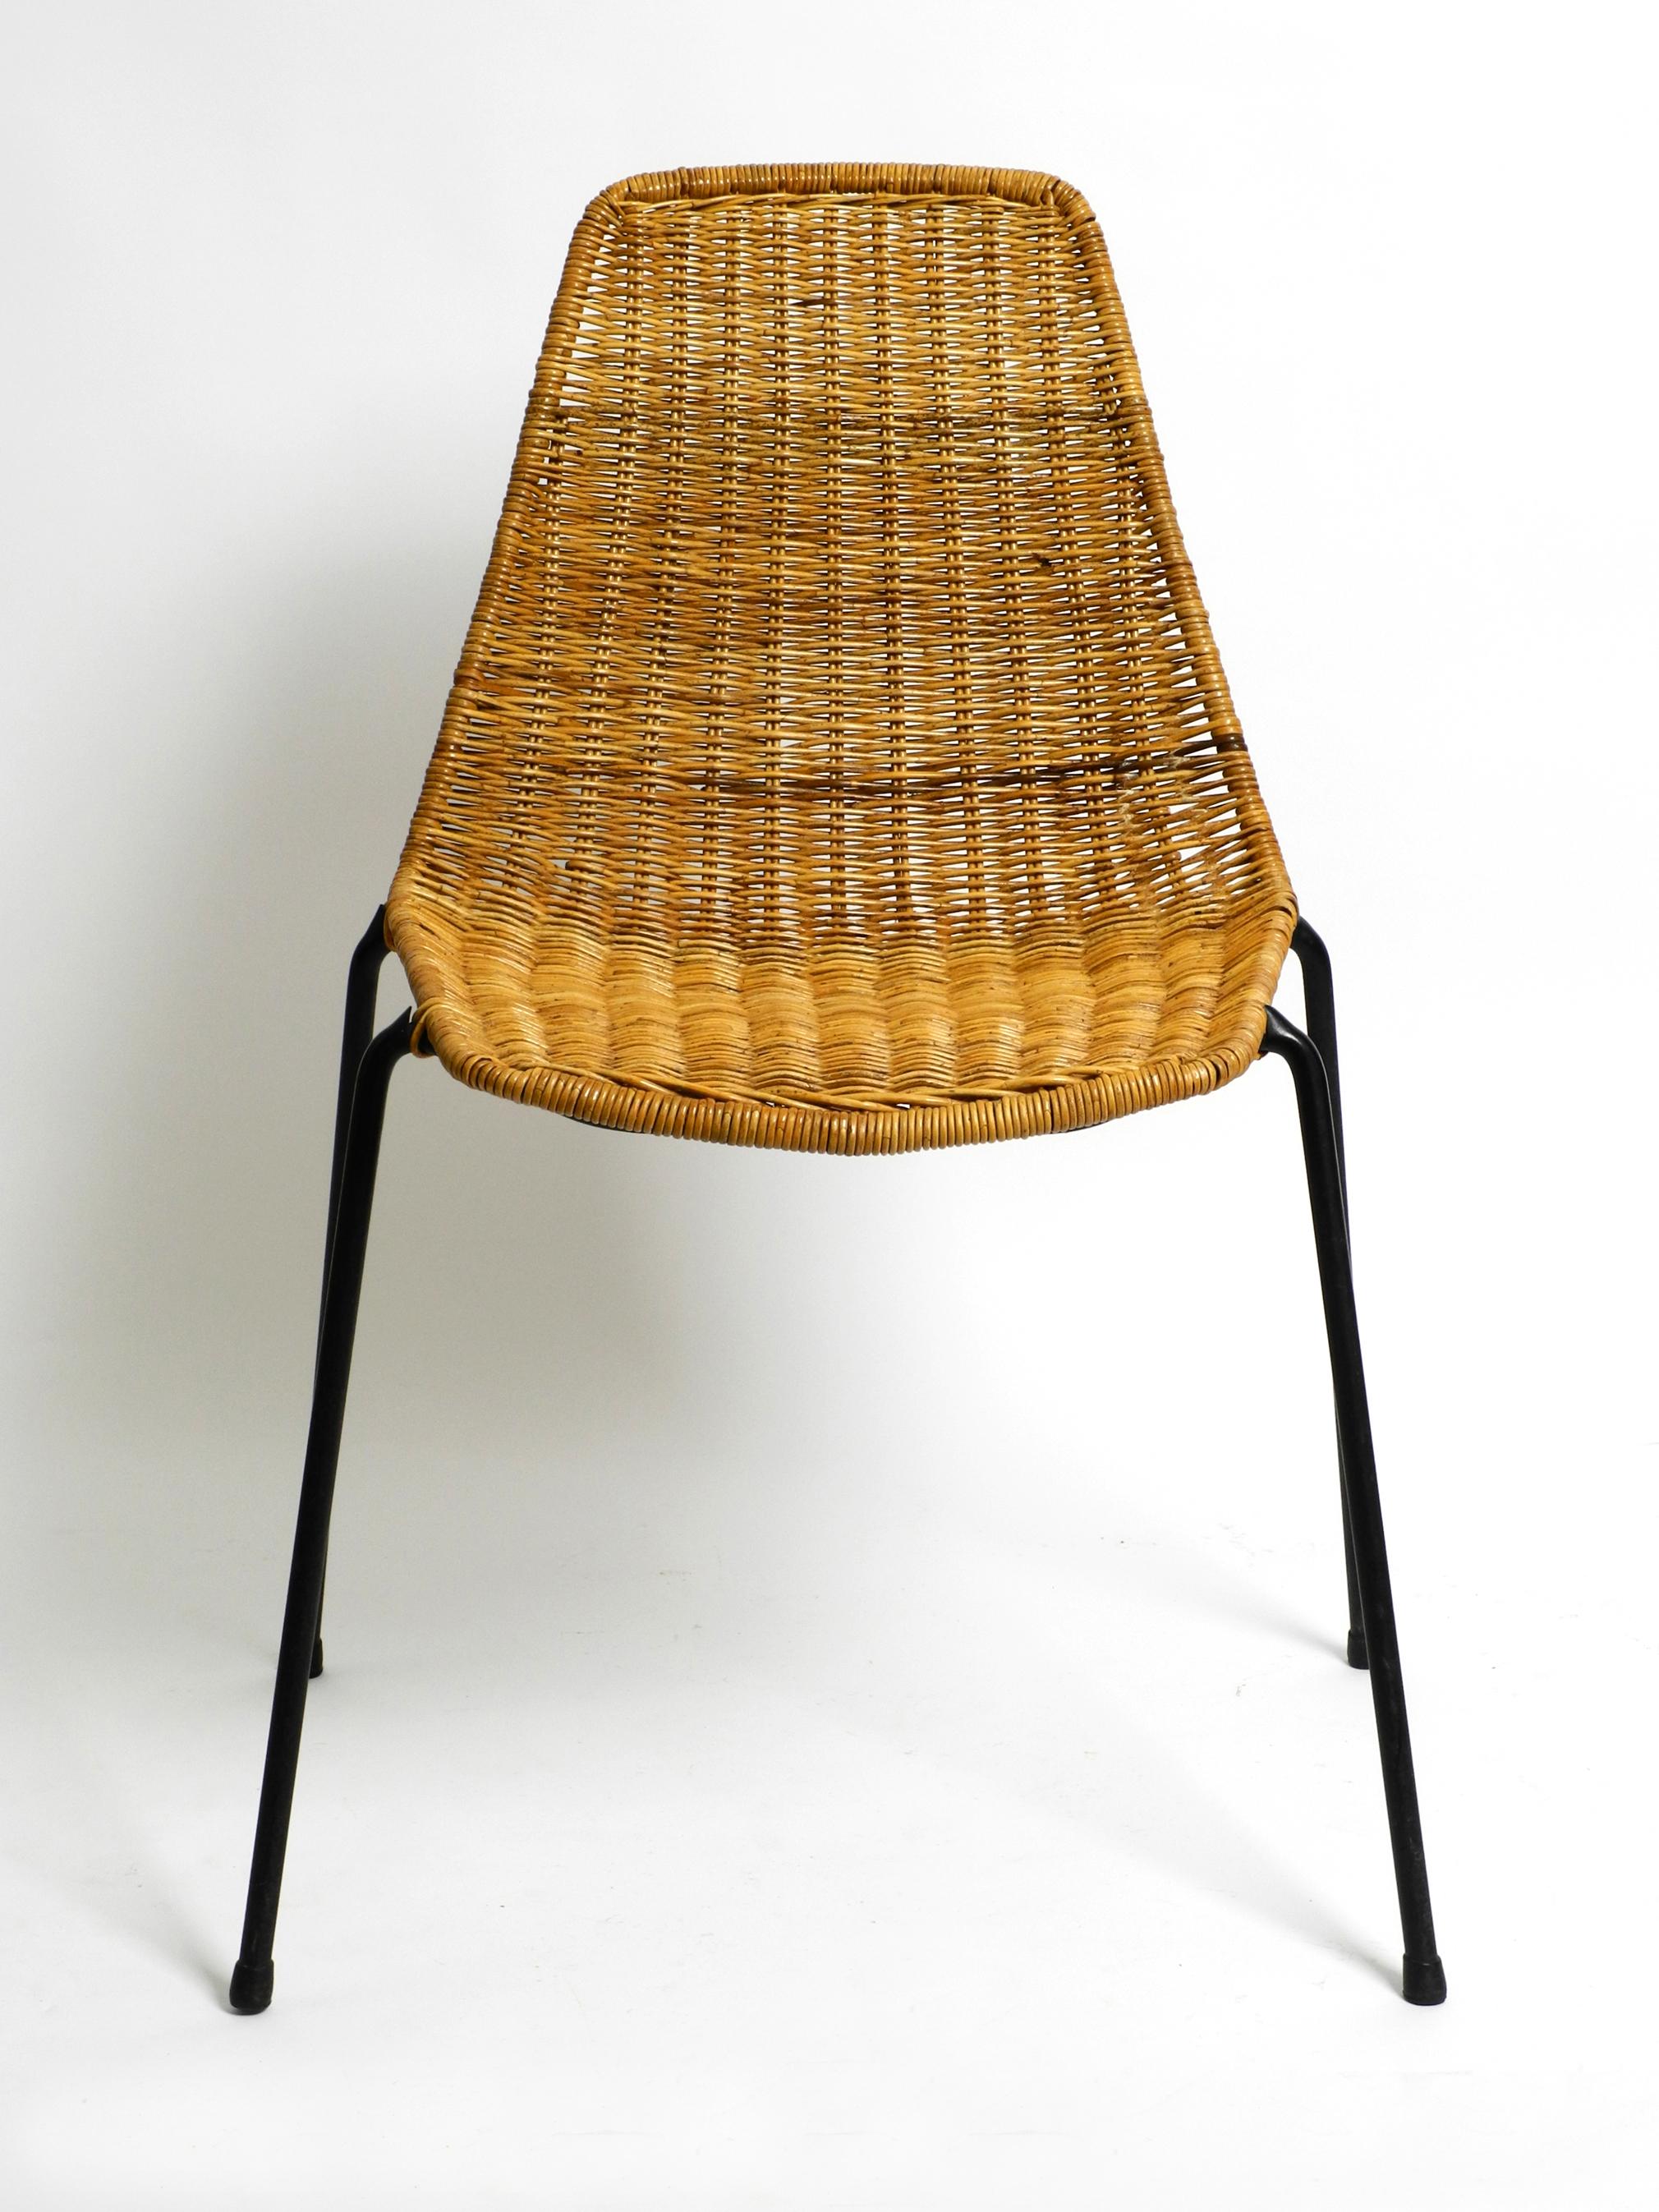 Original Italian Mid-Century Modern Gian Franco Legler Basket Chair For Sale 9